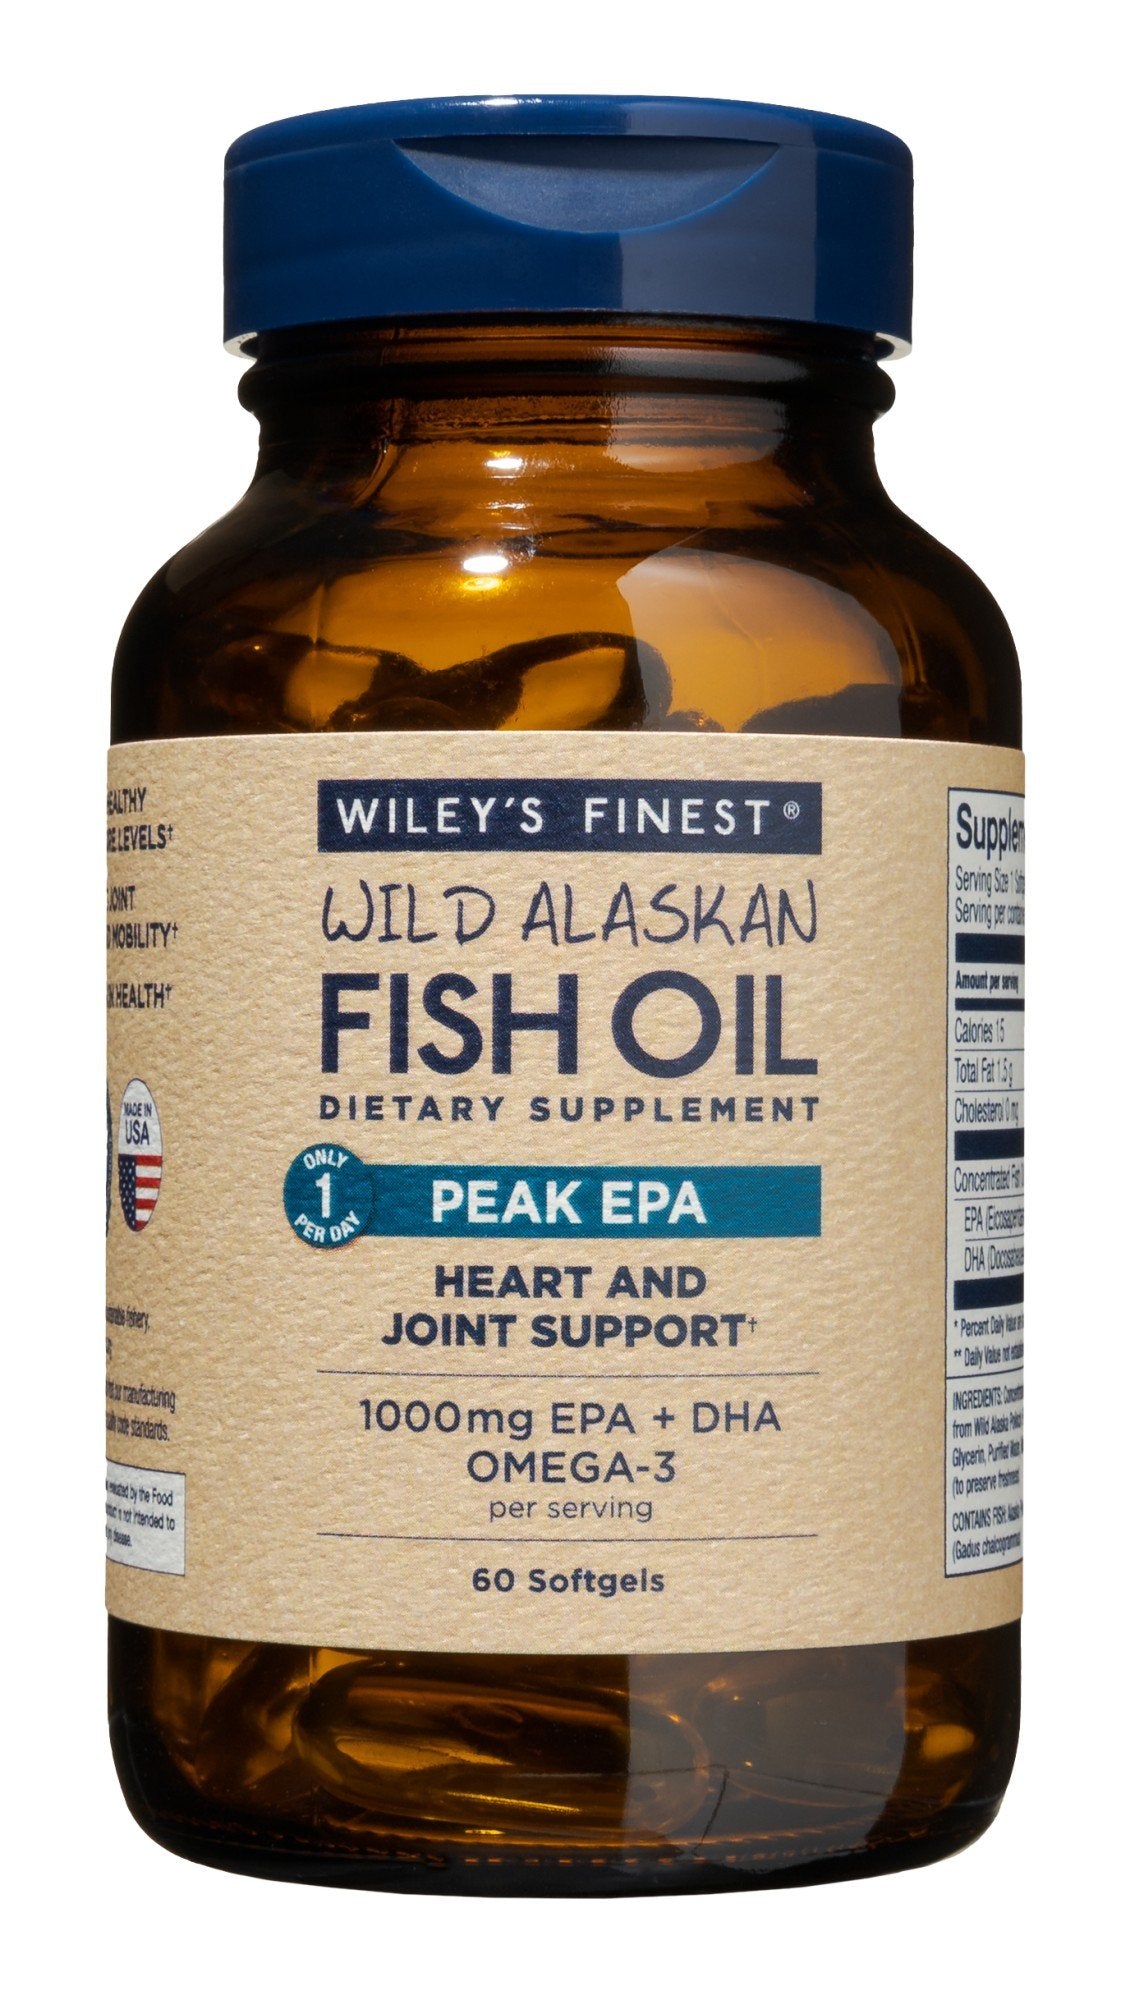 Wileys Finest Wild Alaskan Fish Oil Peak EPA 60 Softgel